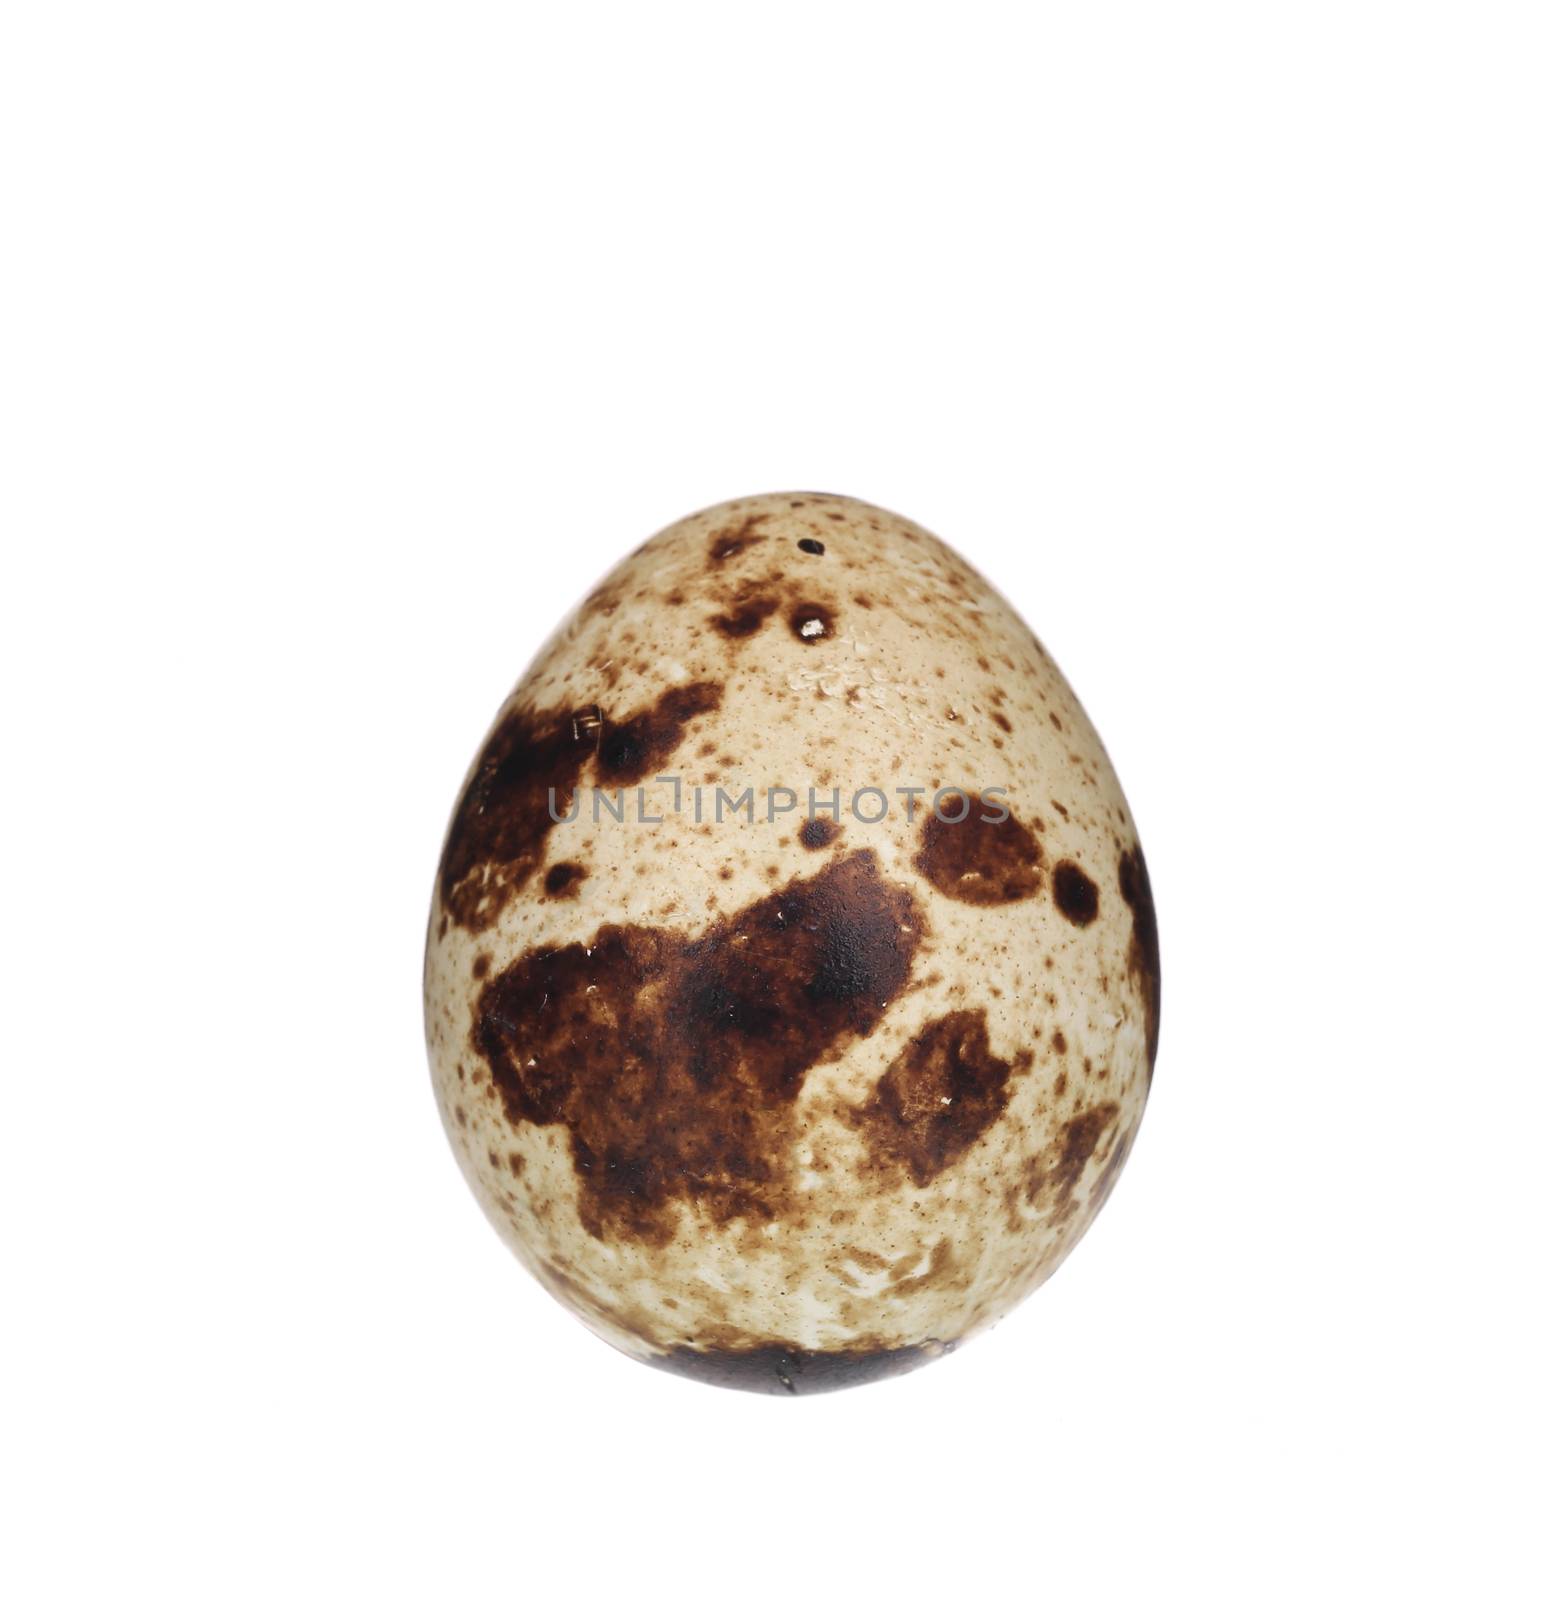 Raw quail egg. by indigolotos